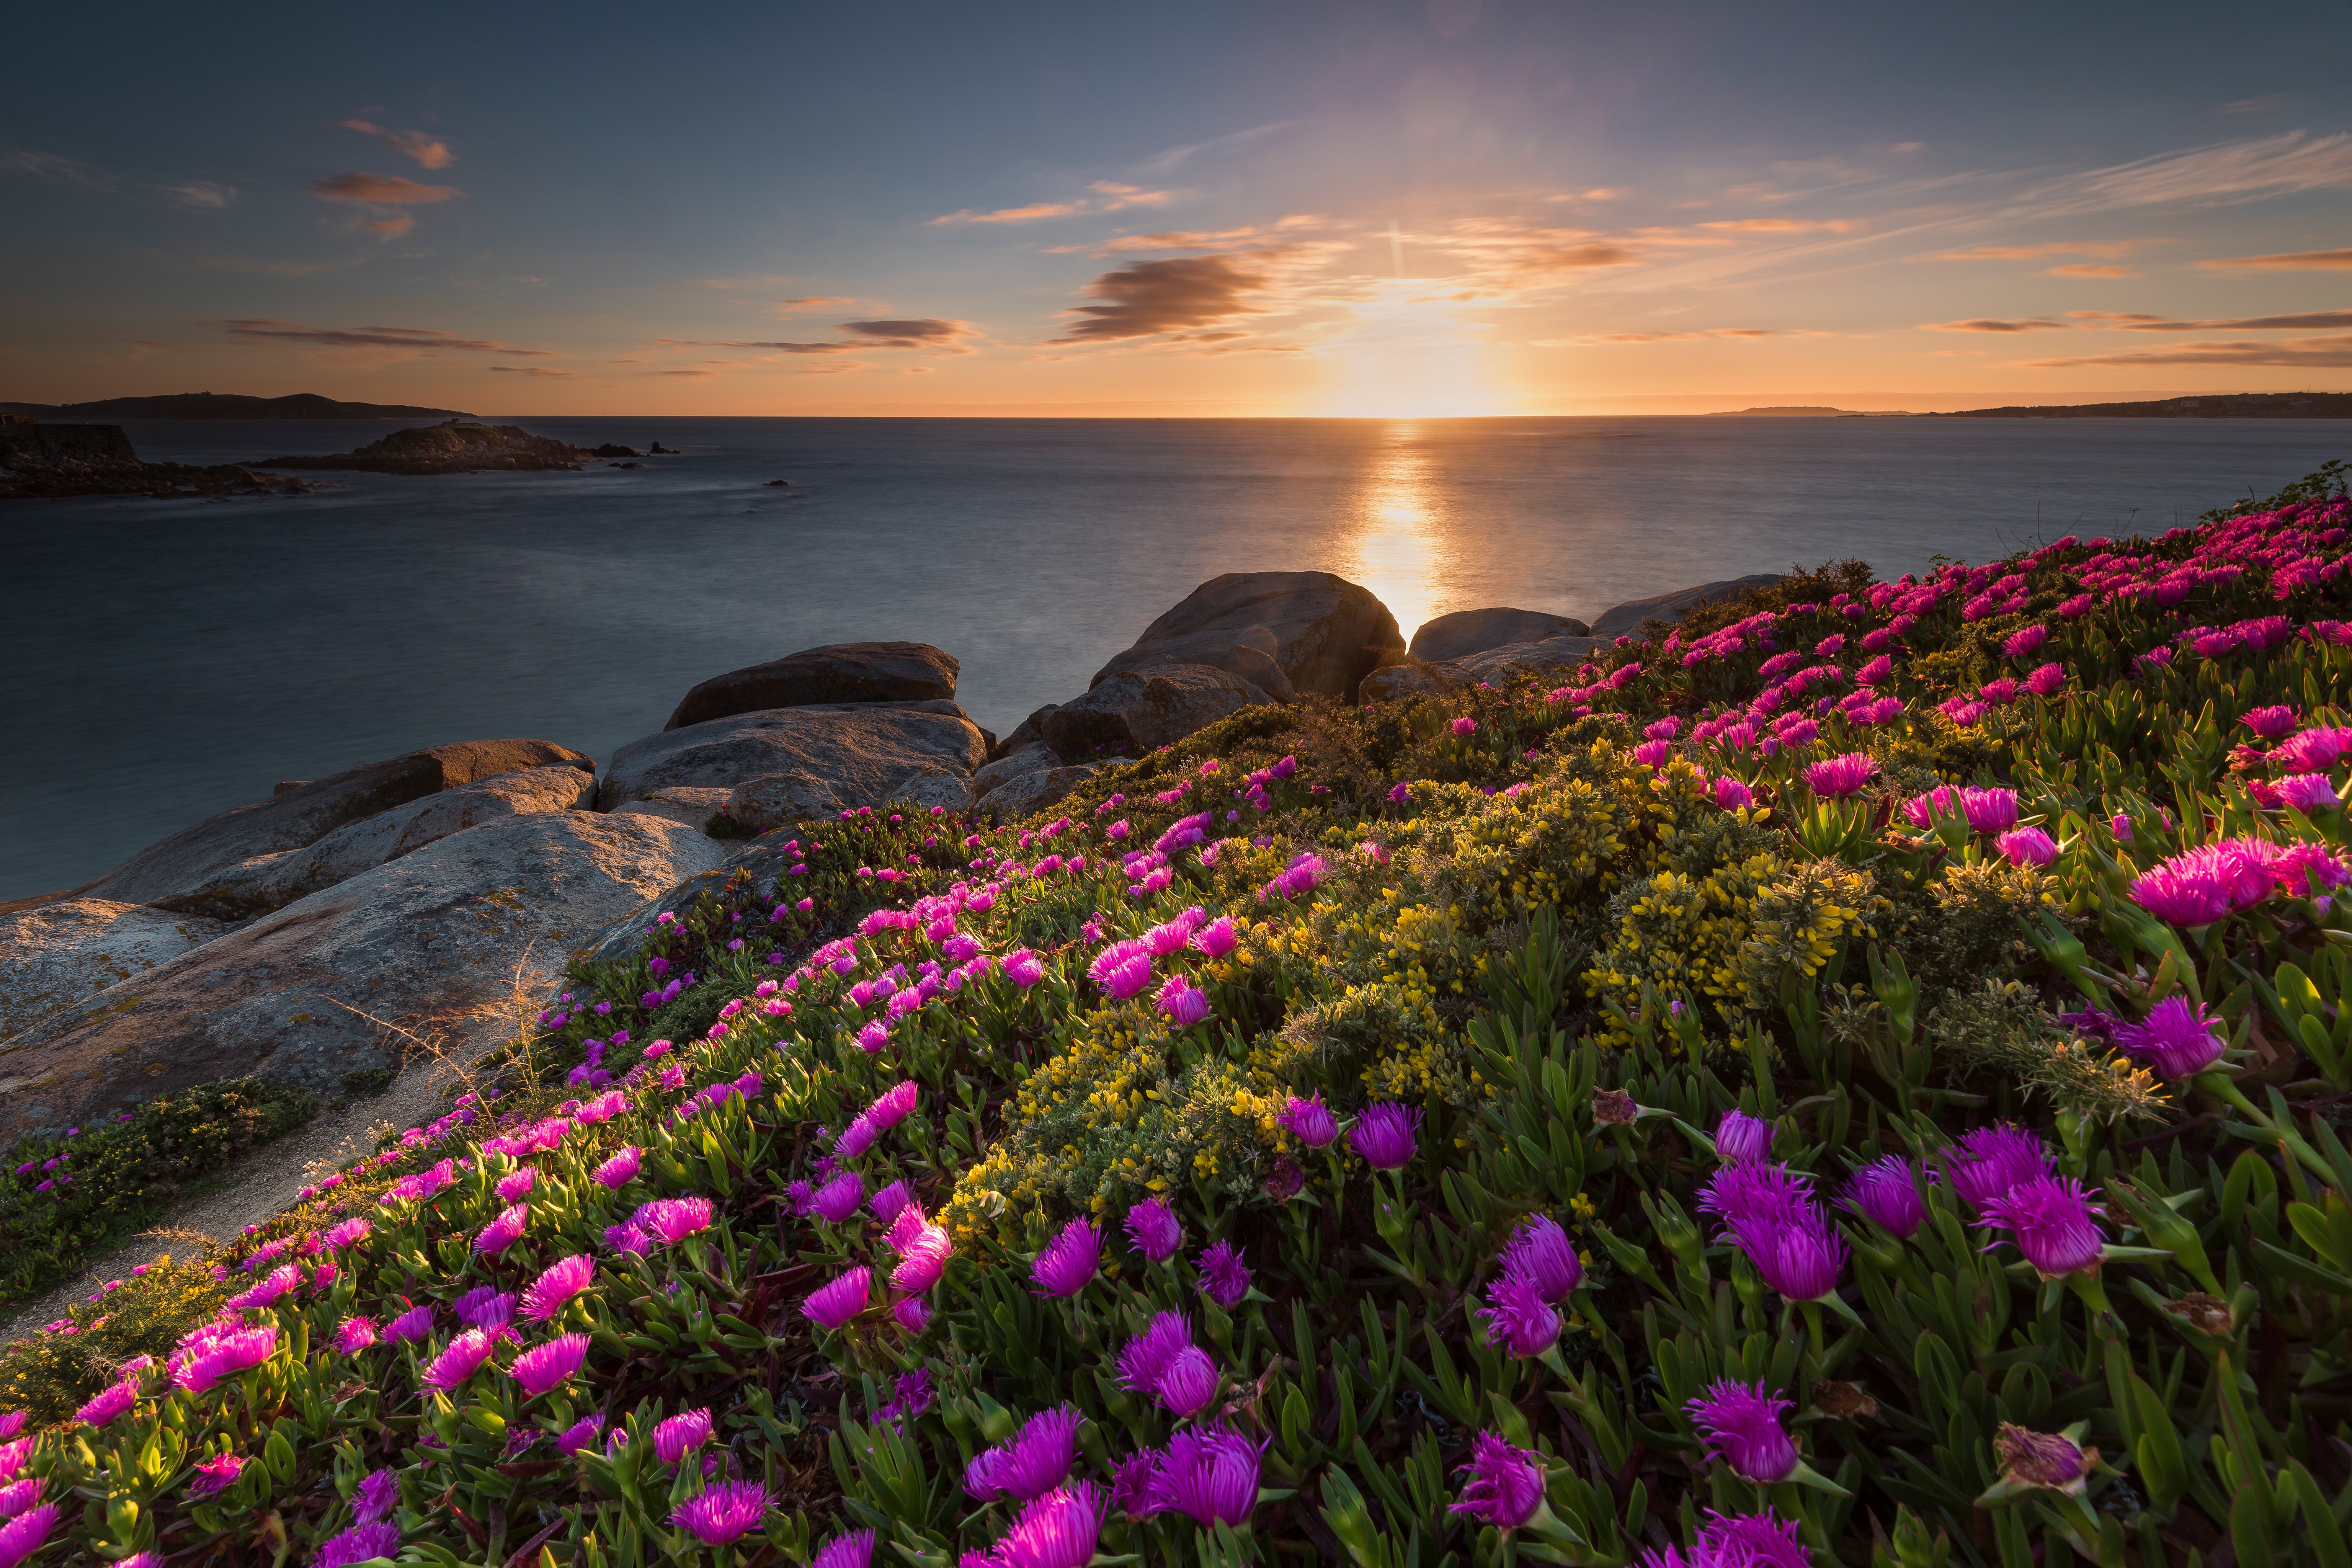 General 6144x4096 flowers grass colorful landscape nature sky sunlight coast plants